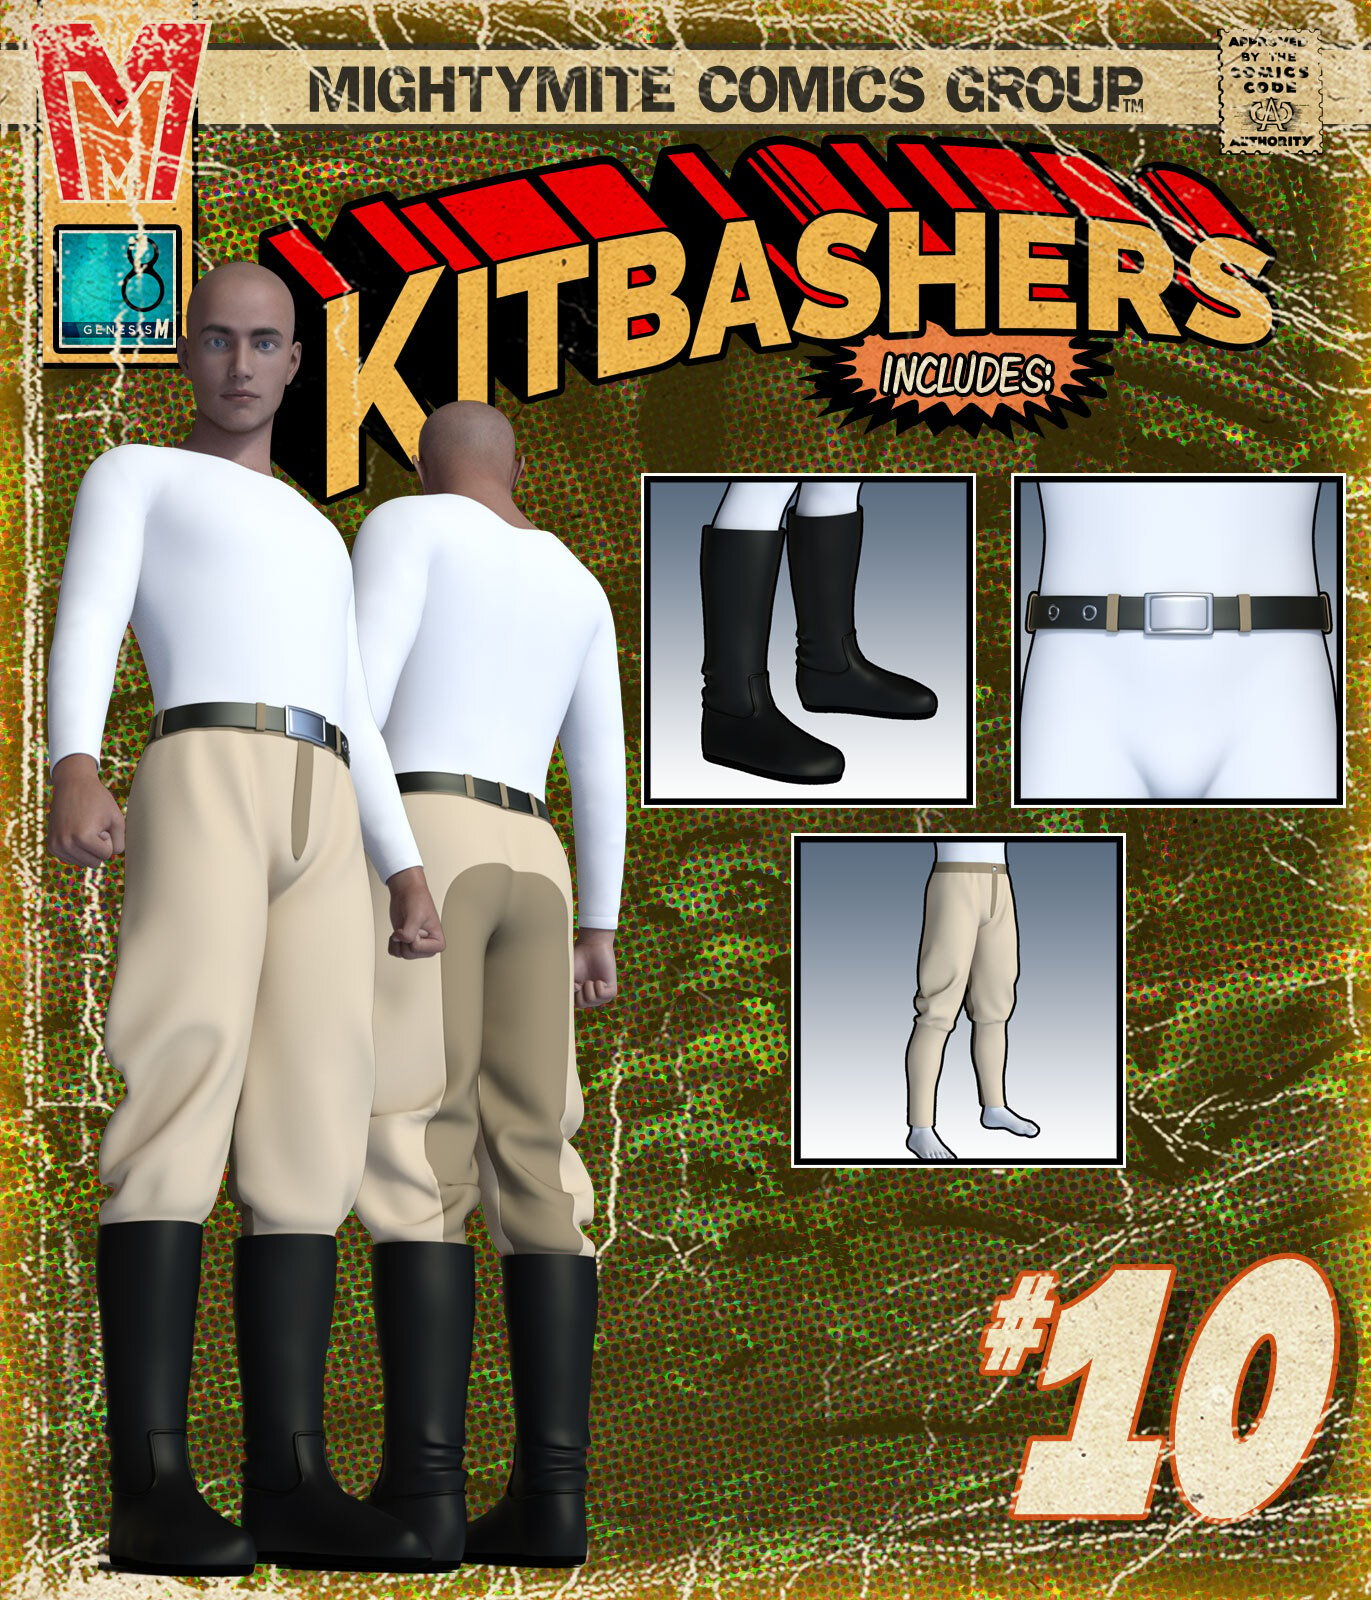 Kitbashers 010 MMG8M by: MightyMite, 3D Models by Daz 3D